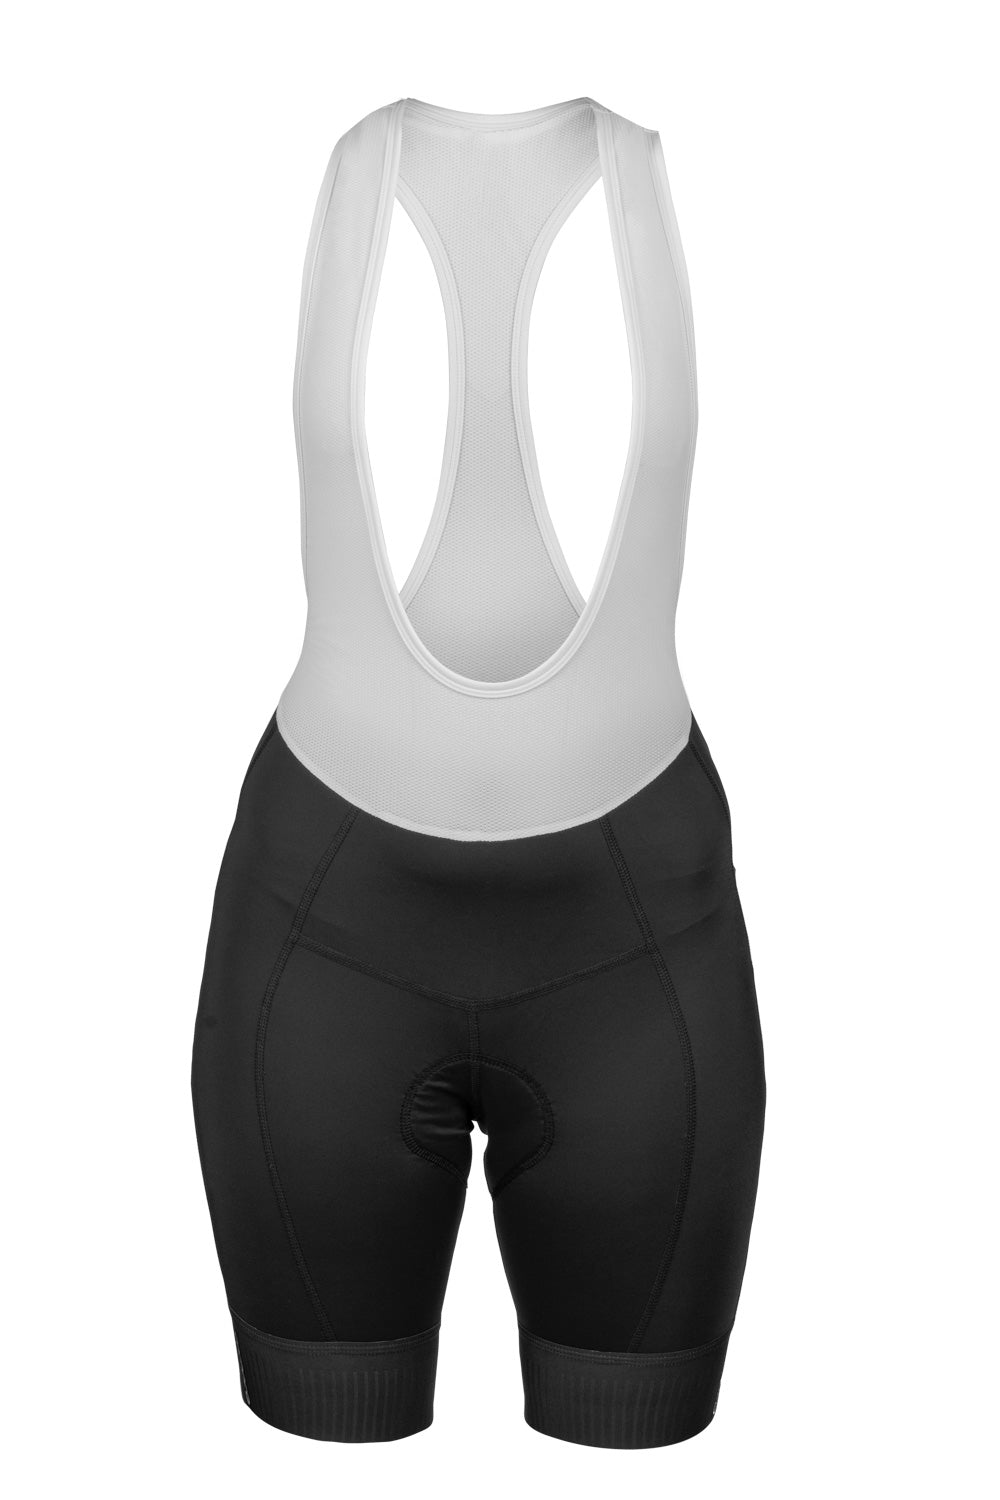 Carnac Women's Haute Bib Shorts / Black